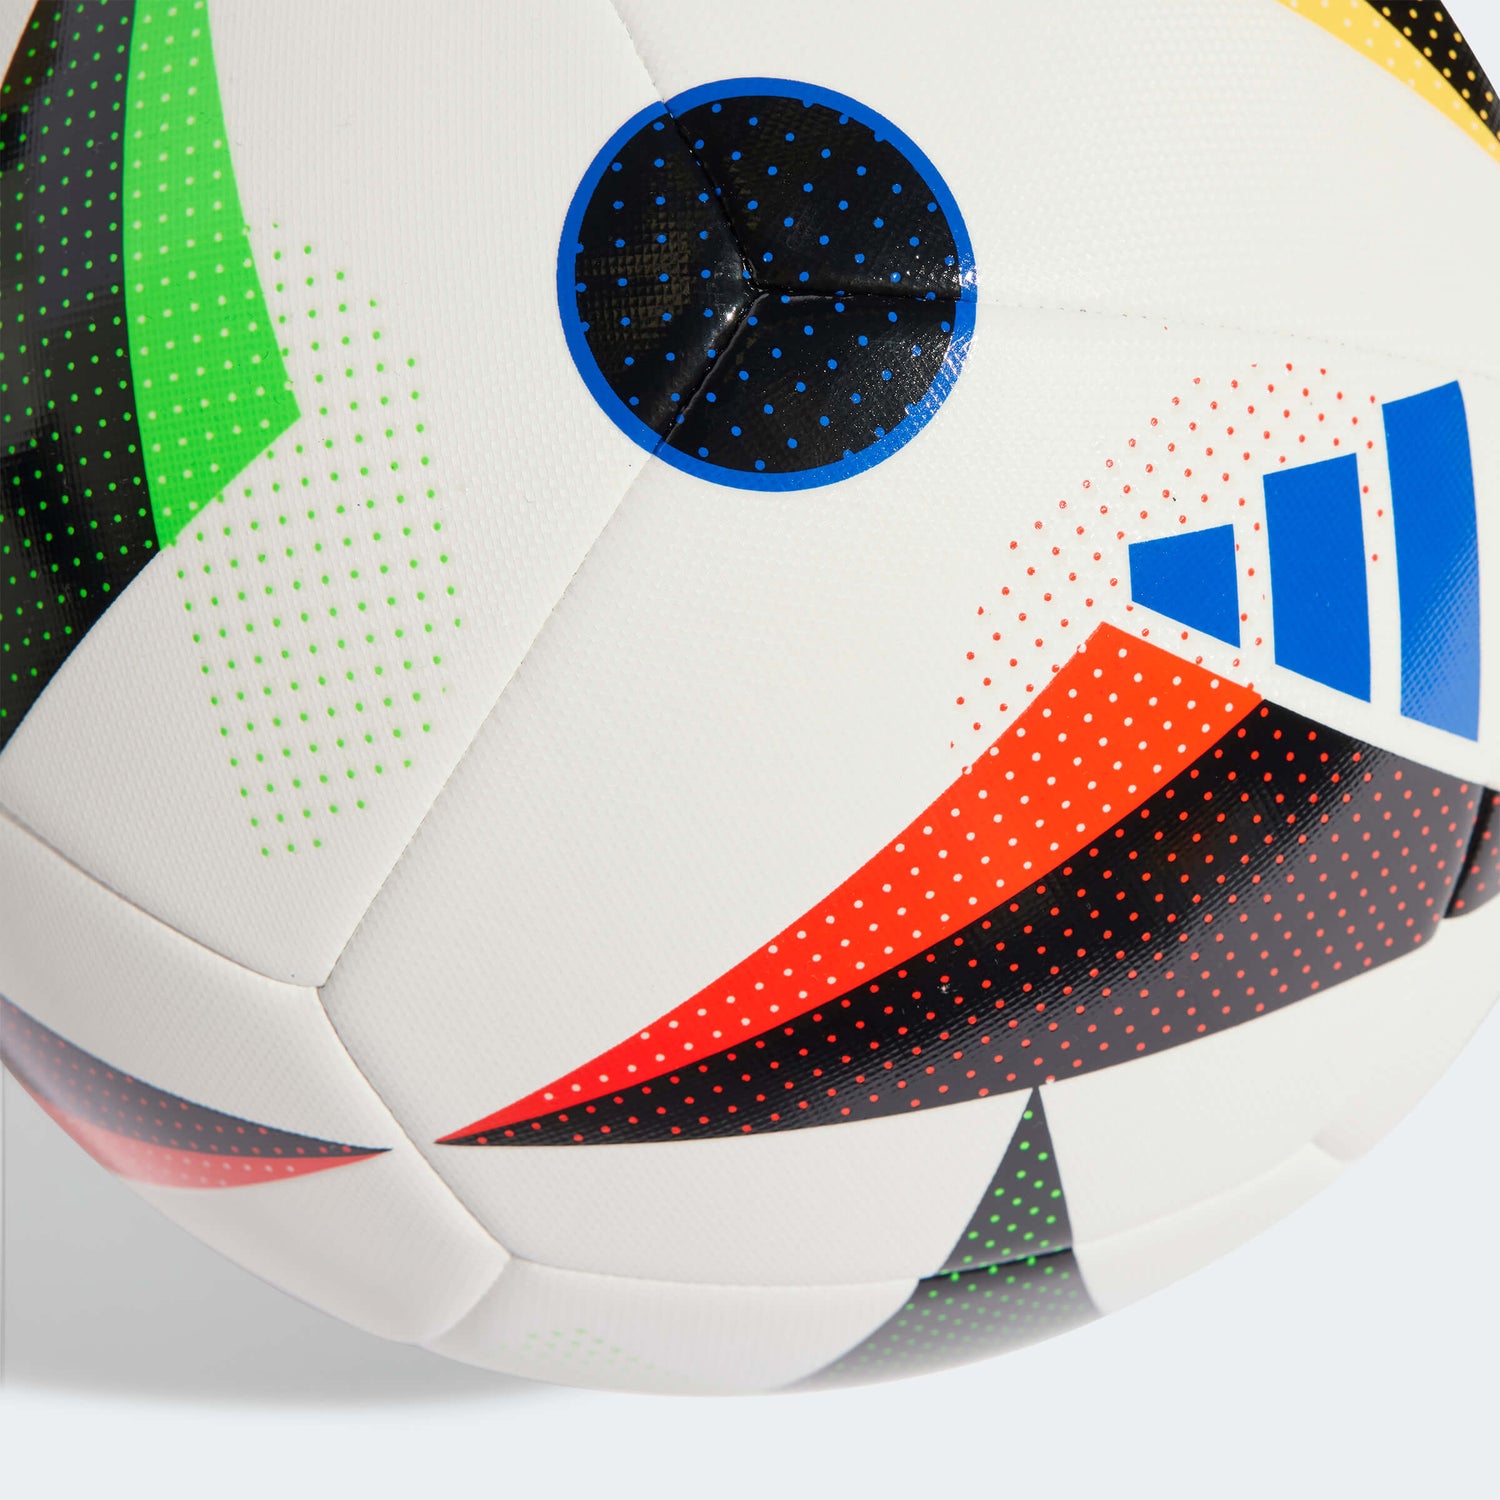 Adidas UEFA Euro 2024 Germany Fussballliebe Match Ball Soccer ball Size 5